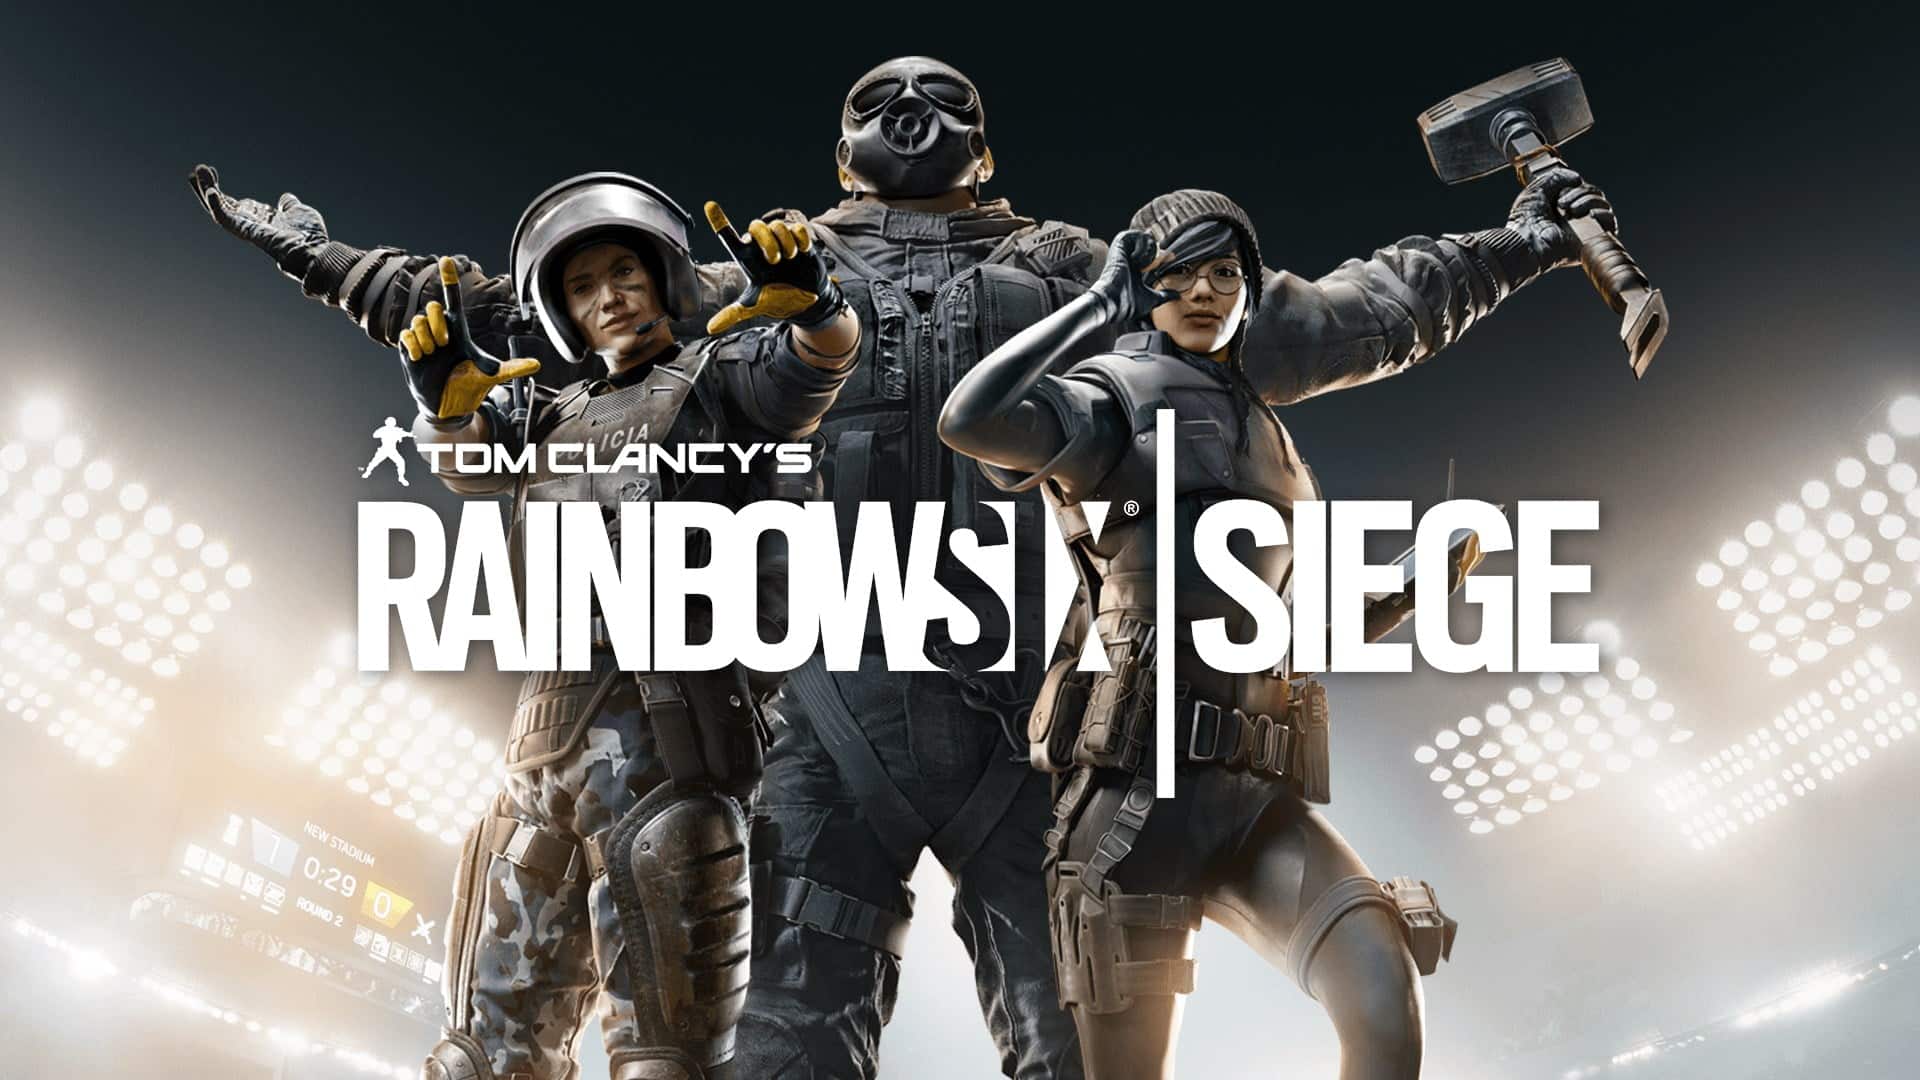 Rainbow six siege vence prêmio esports brasil | d761655d apps. 3469. 65170969132831011. 1a6969c2 c209 441f 86d0 c320c947d7bb. Fe8618fc ffbd 48eb b9c5 d95b2c316f9b | fps, multiplayer, pc, playstation, raibow six, xbox | rainbow six siege vence prêmio notícias